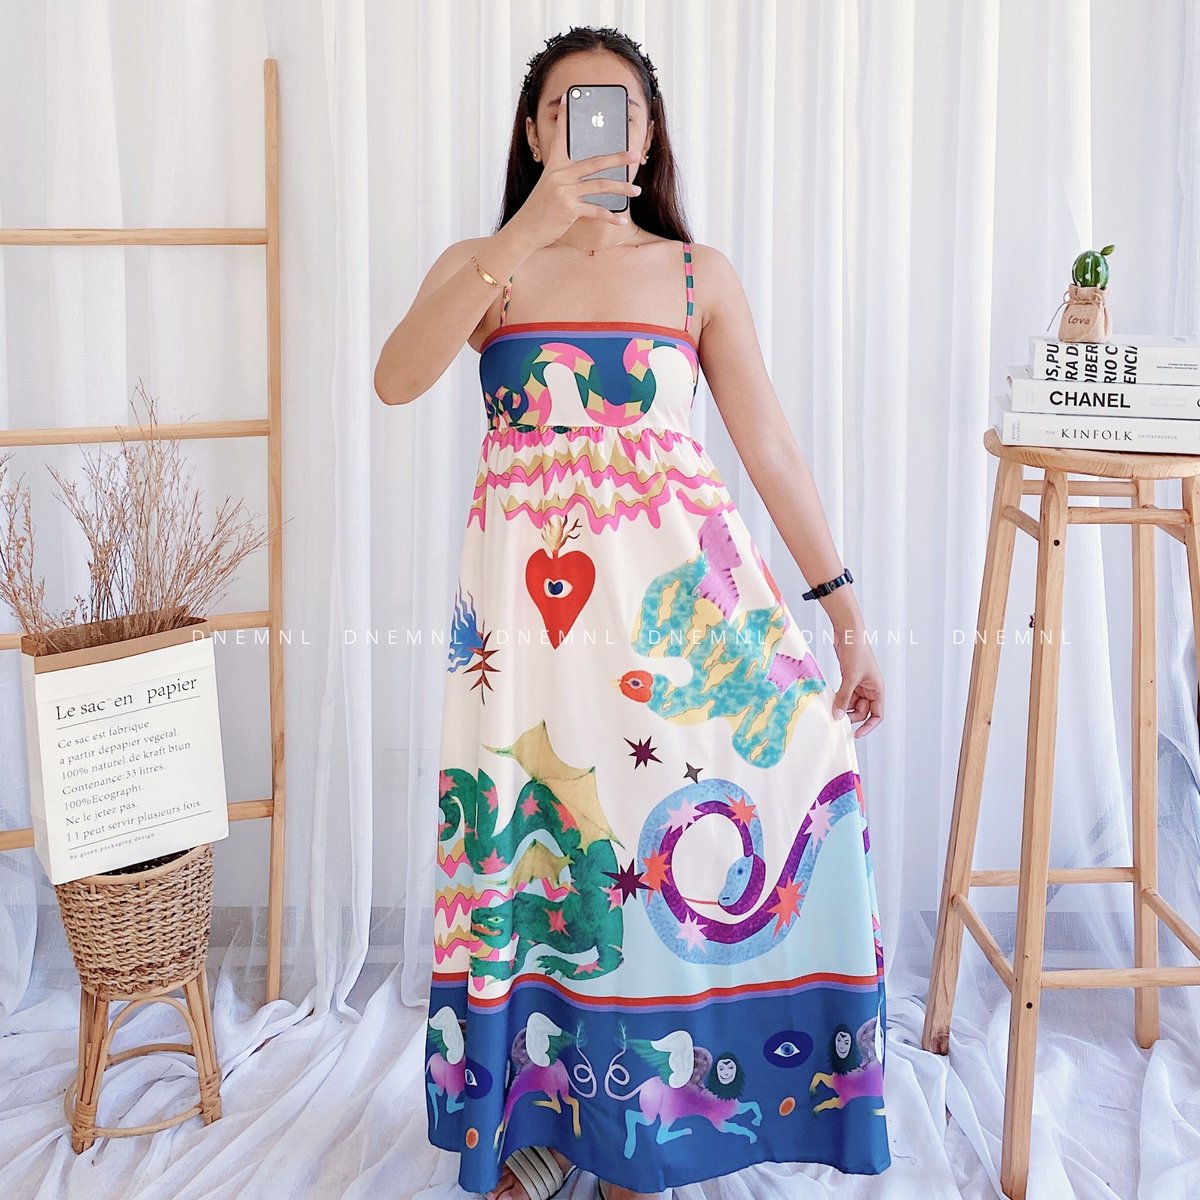 Cool, comfy, and cute: summer fashion goals achieved✨️ Shop here: • Shopee: shope.ee/8KMS51umuK • Lazada: s.lazada.com.ph/l.78W • Tiktok: tiktok.com/@dnemnlph #dnemnlph #dnemnl #LazadaPH #ShopeePH #TikTok #Dress